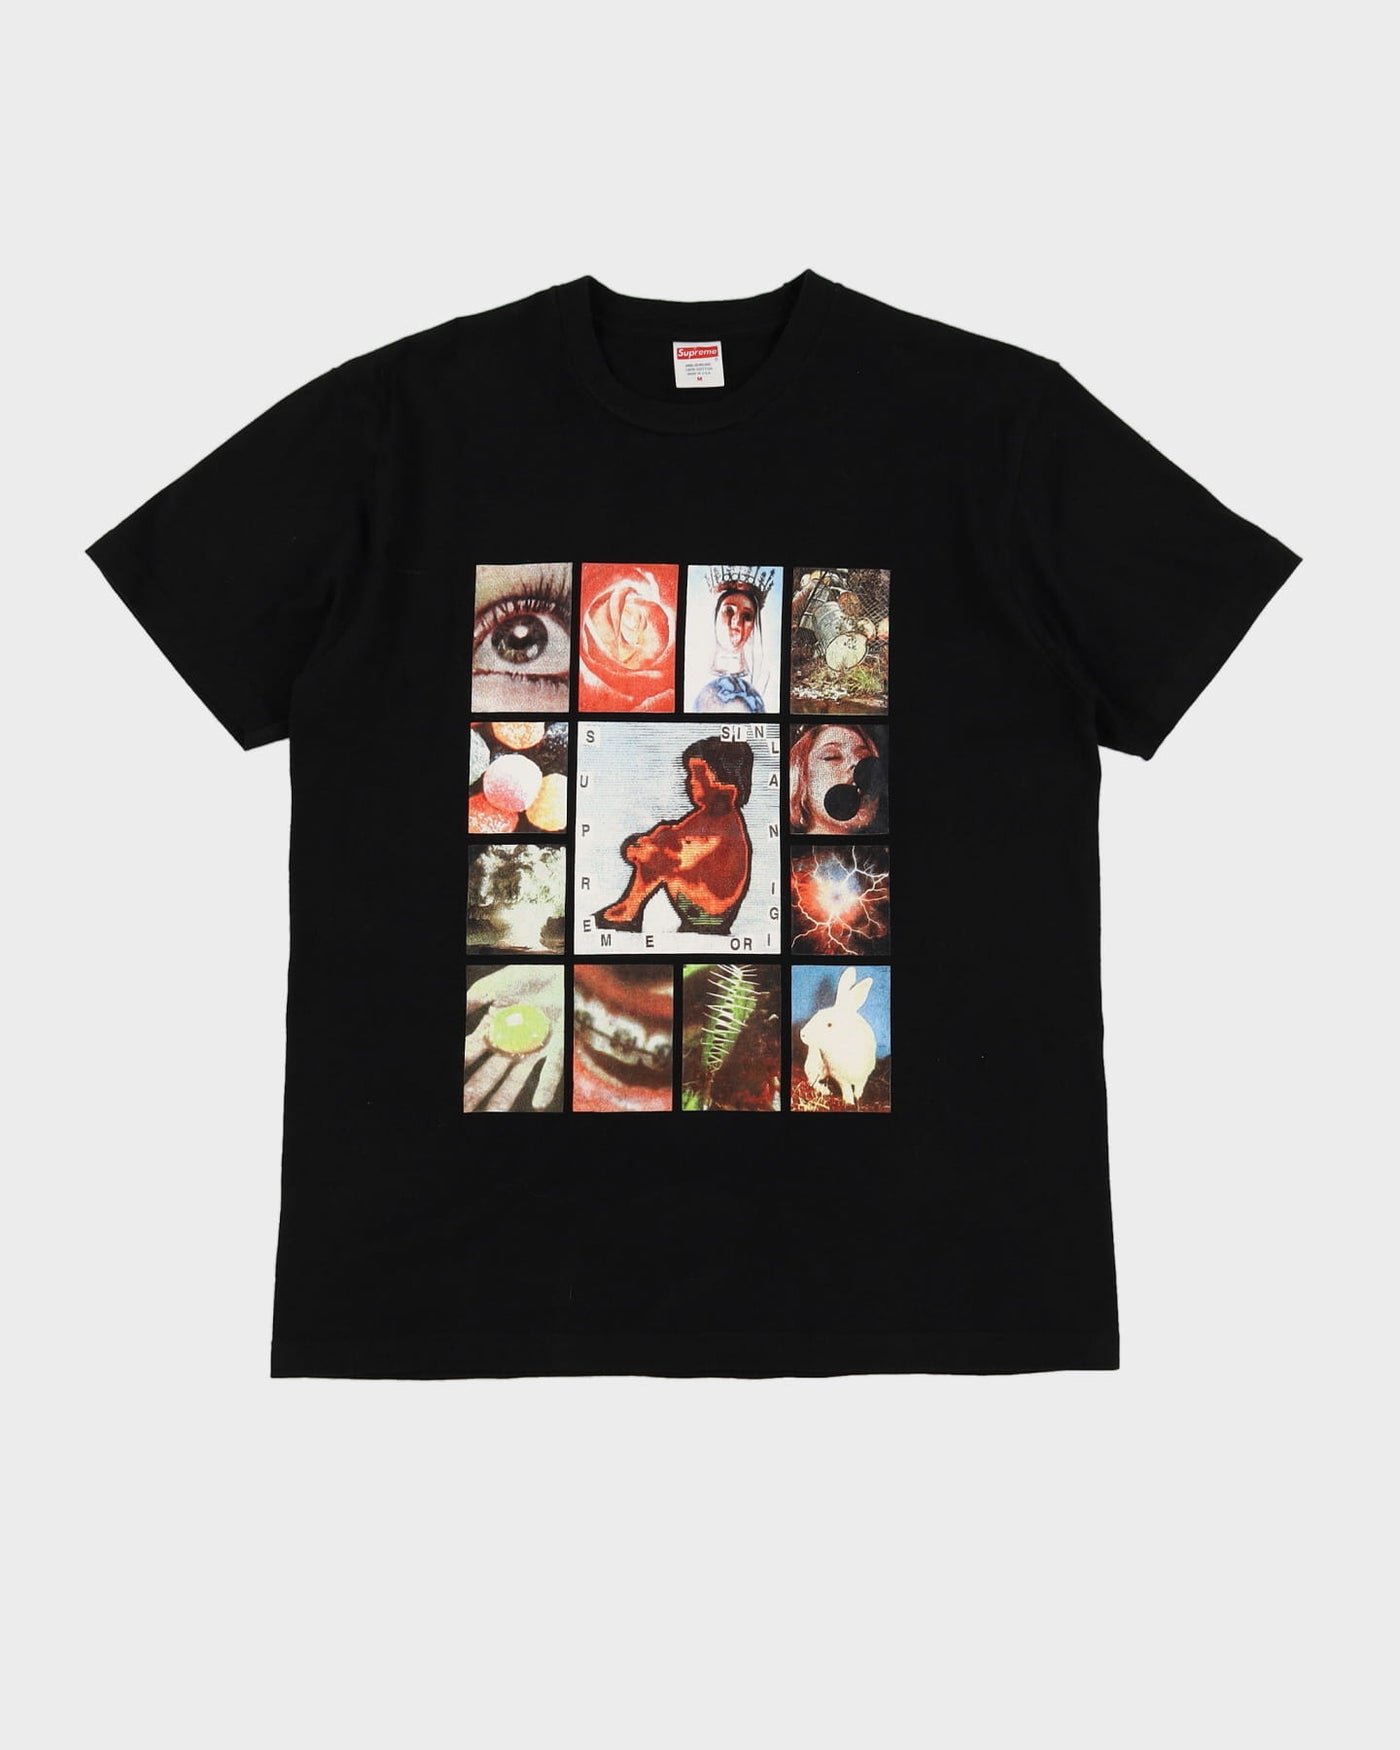 Supreme Originals Black Graphic T-Shirt - M